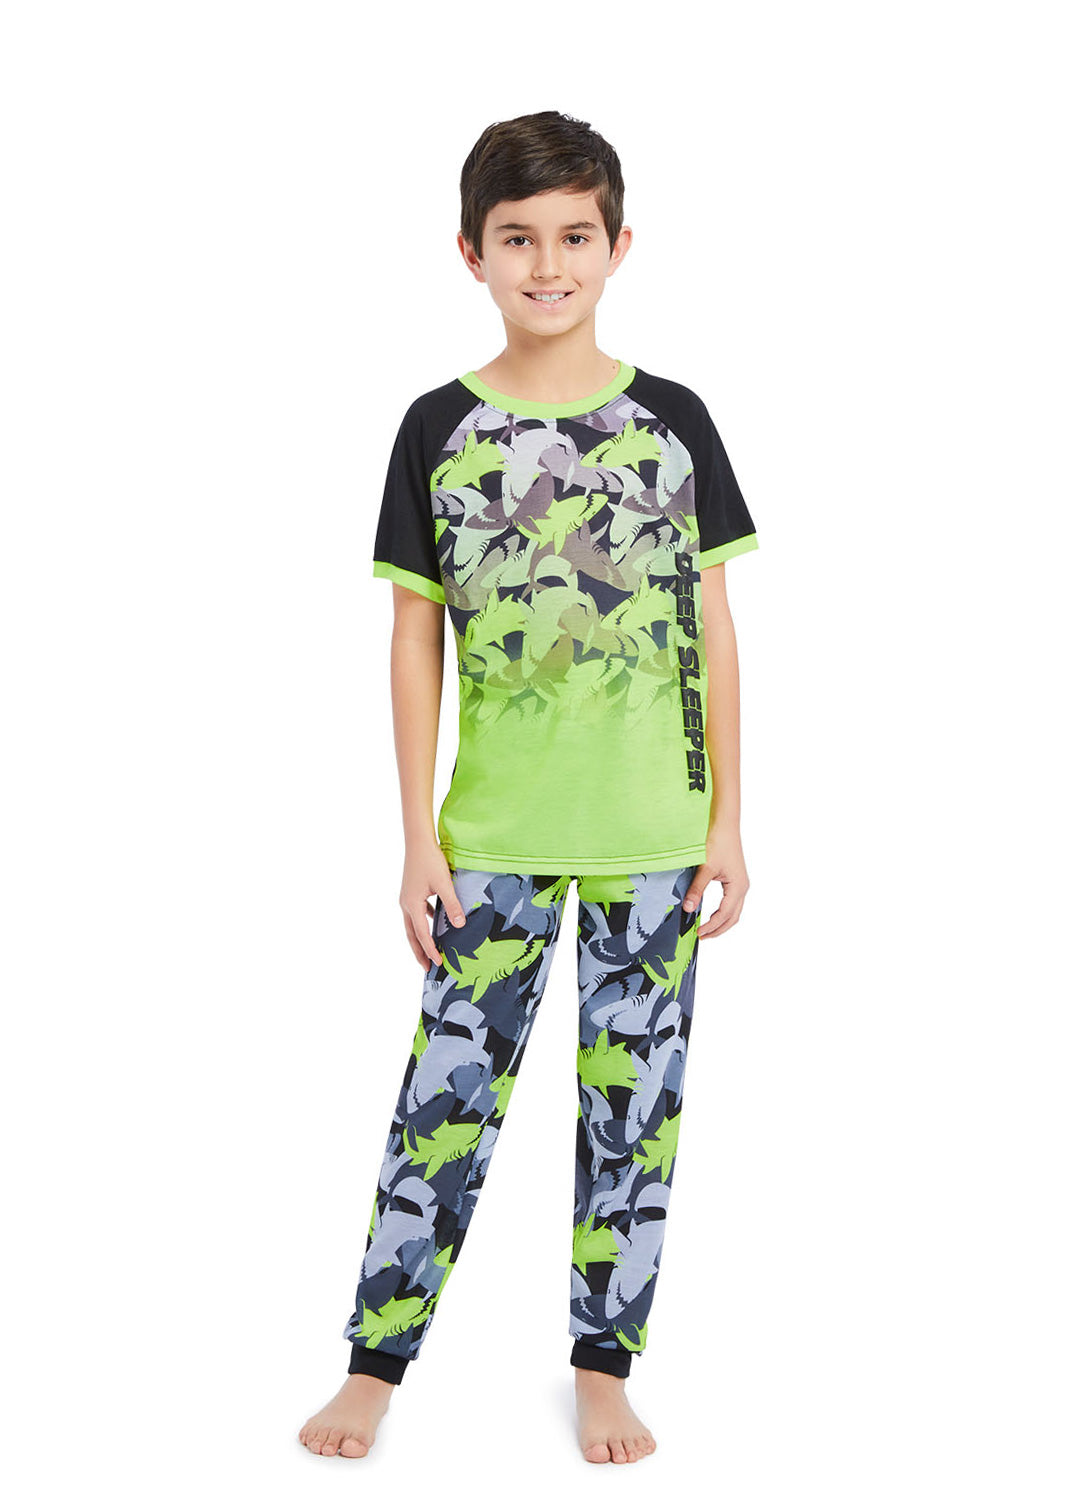 Boy wearing Pajama Set Shark, t-shirt (green & black) with print and pants with print